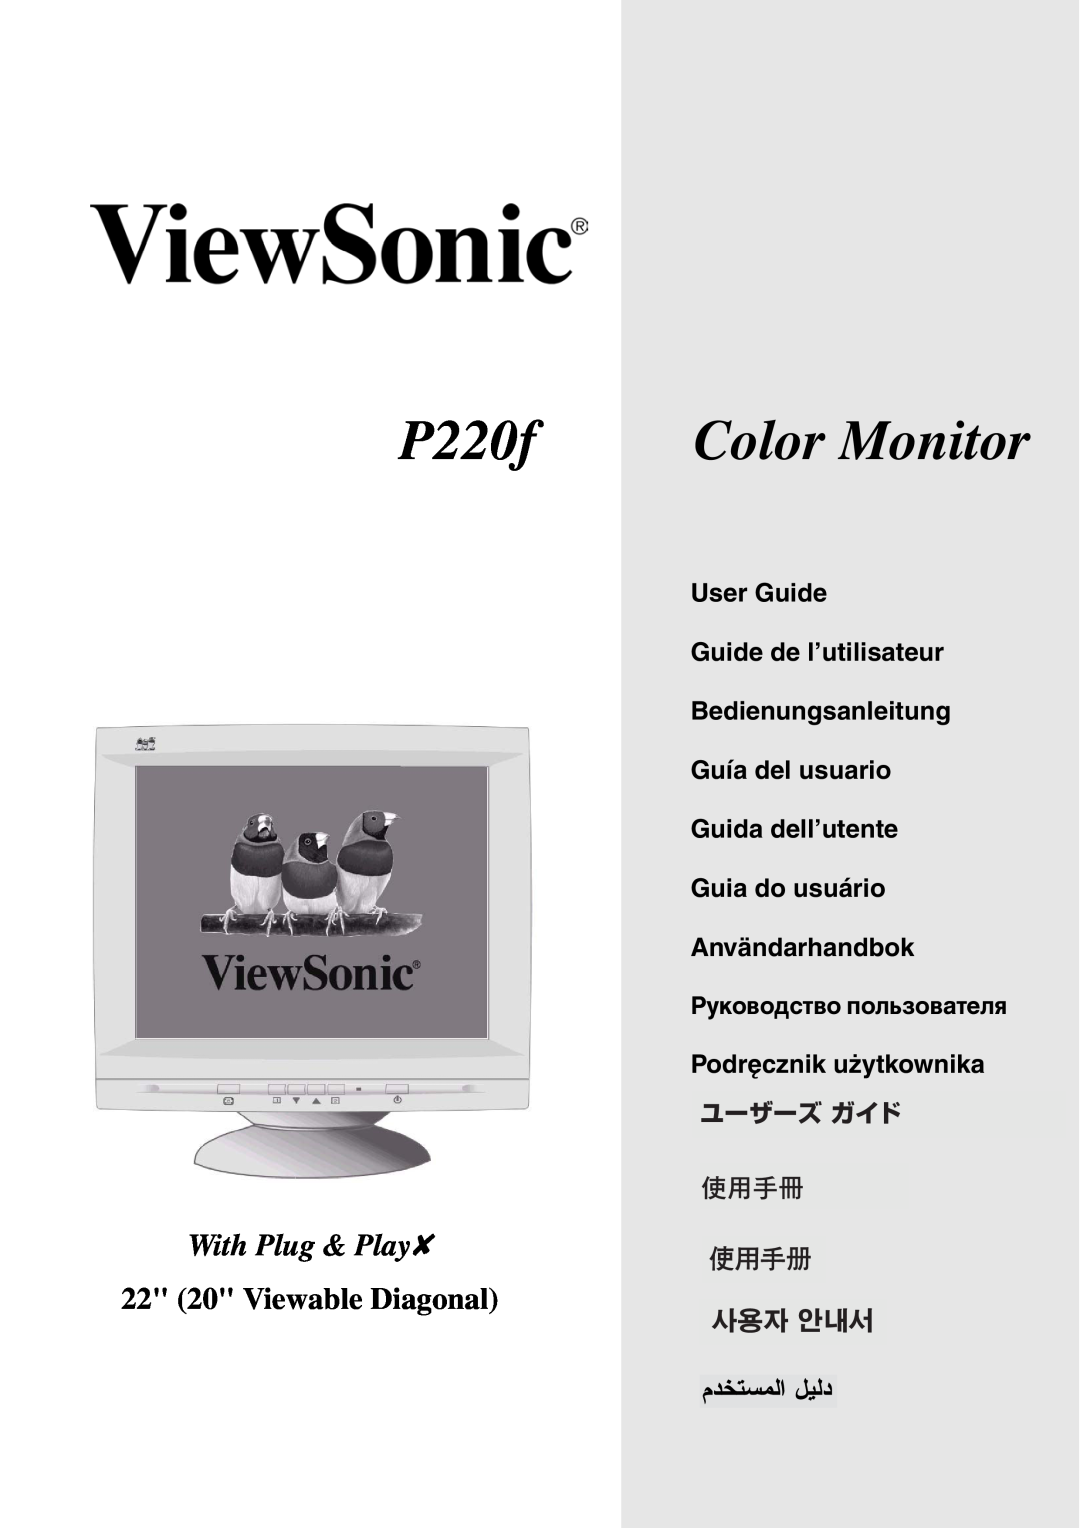 ViewSonic P220f manual 22 20 Viewable Diagonal, User Guide Guide de l’utilisateur, Bedienungsanleitung Guía del usuario 